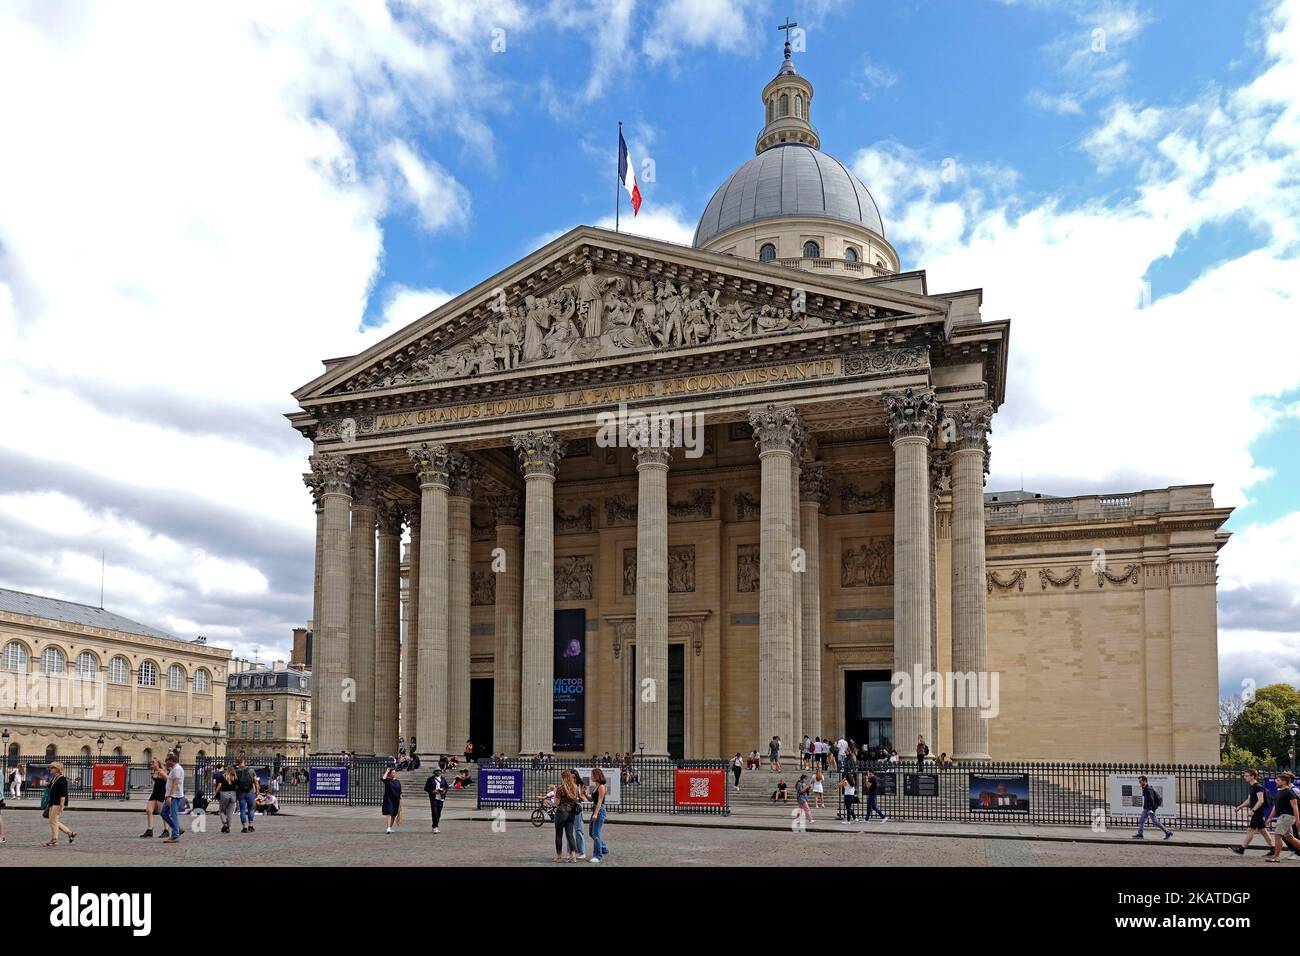 France, Paris, Pantheon in Latin quarter   Photo © Fabio Mazzarella/Sintesi/Alamy Stock Photo Stock Photo